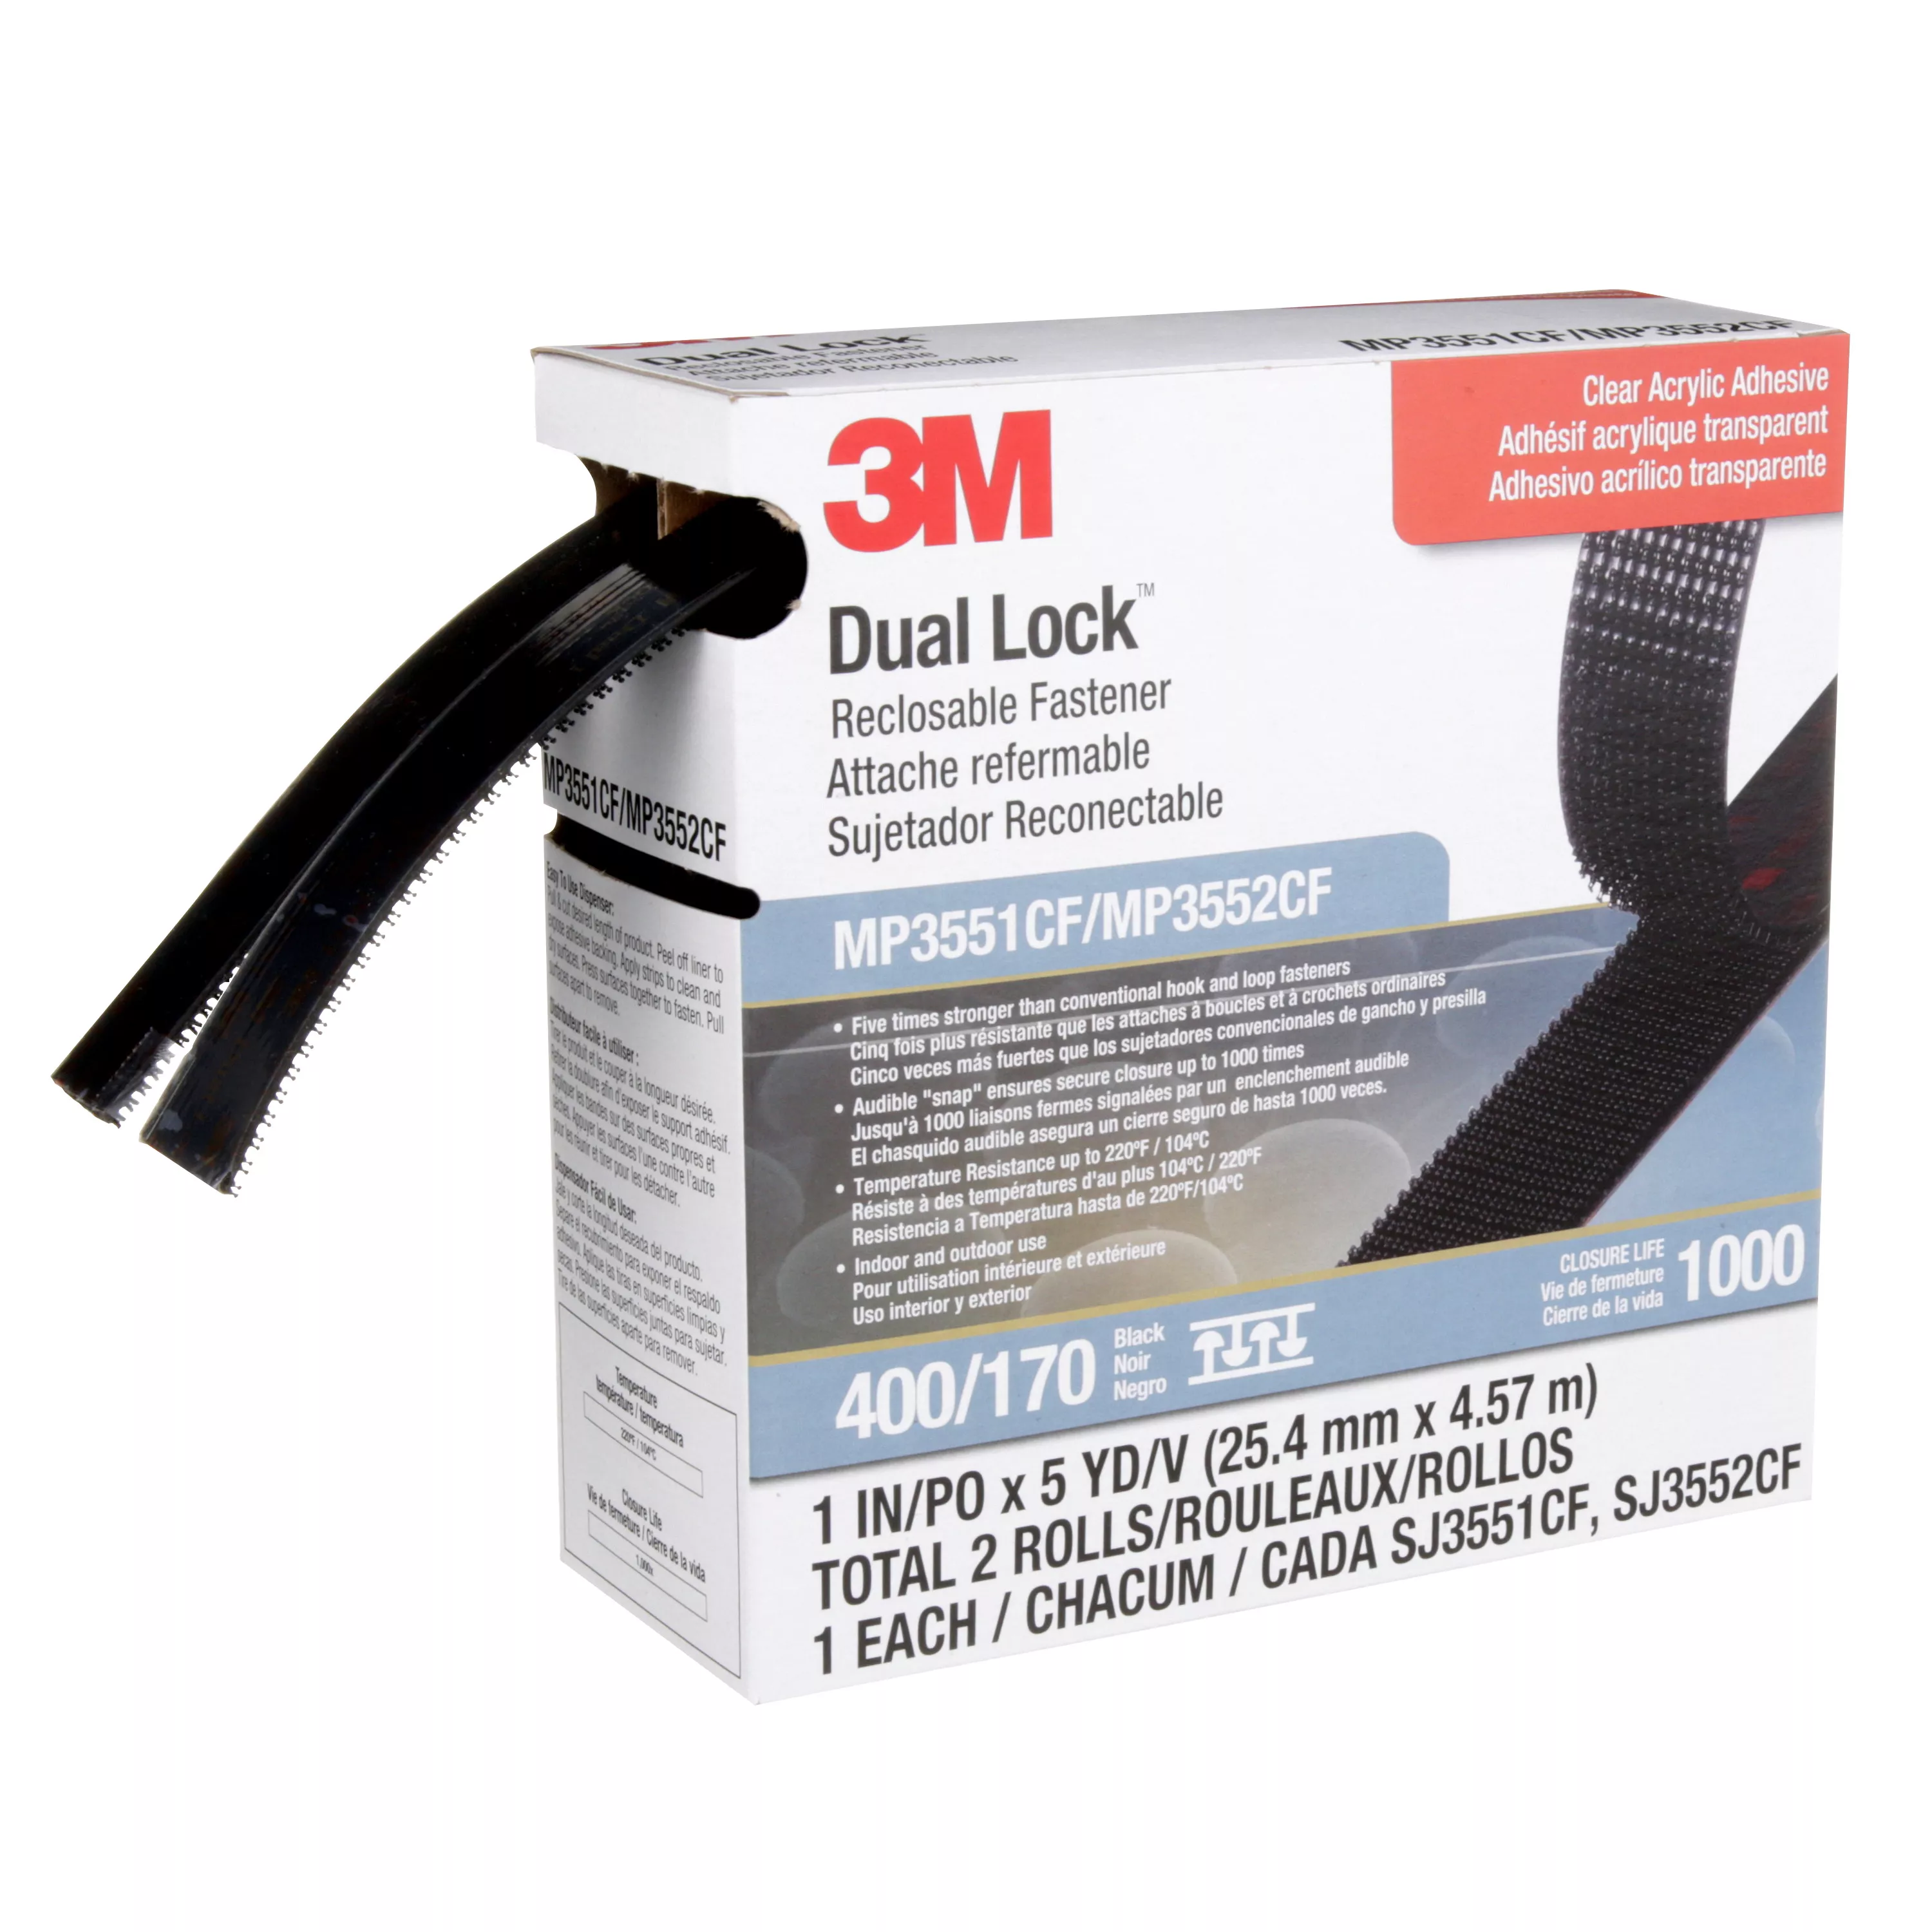 3M™ Dual Lock™ Reclosable Fastener MP3551CF/MP3552CF, Black, 1 in x 5 yd, Type 400/170, 5 Packs/Case